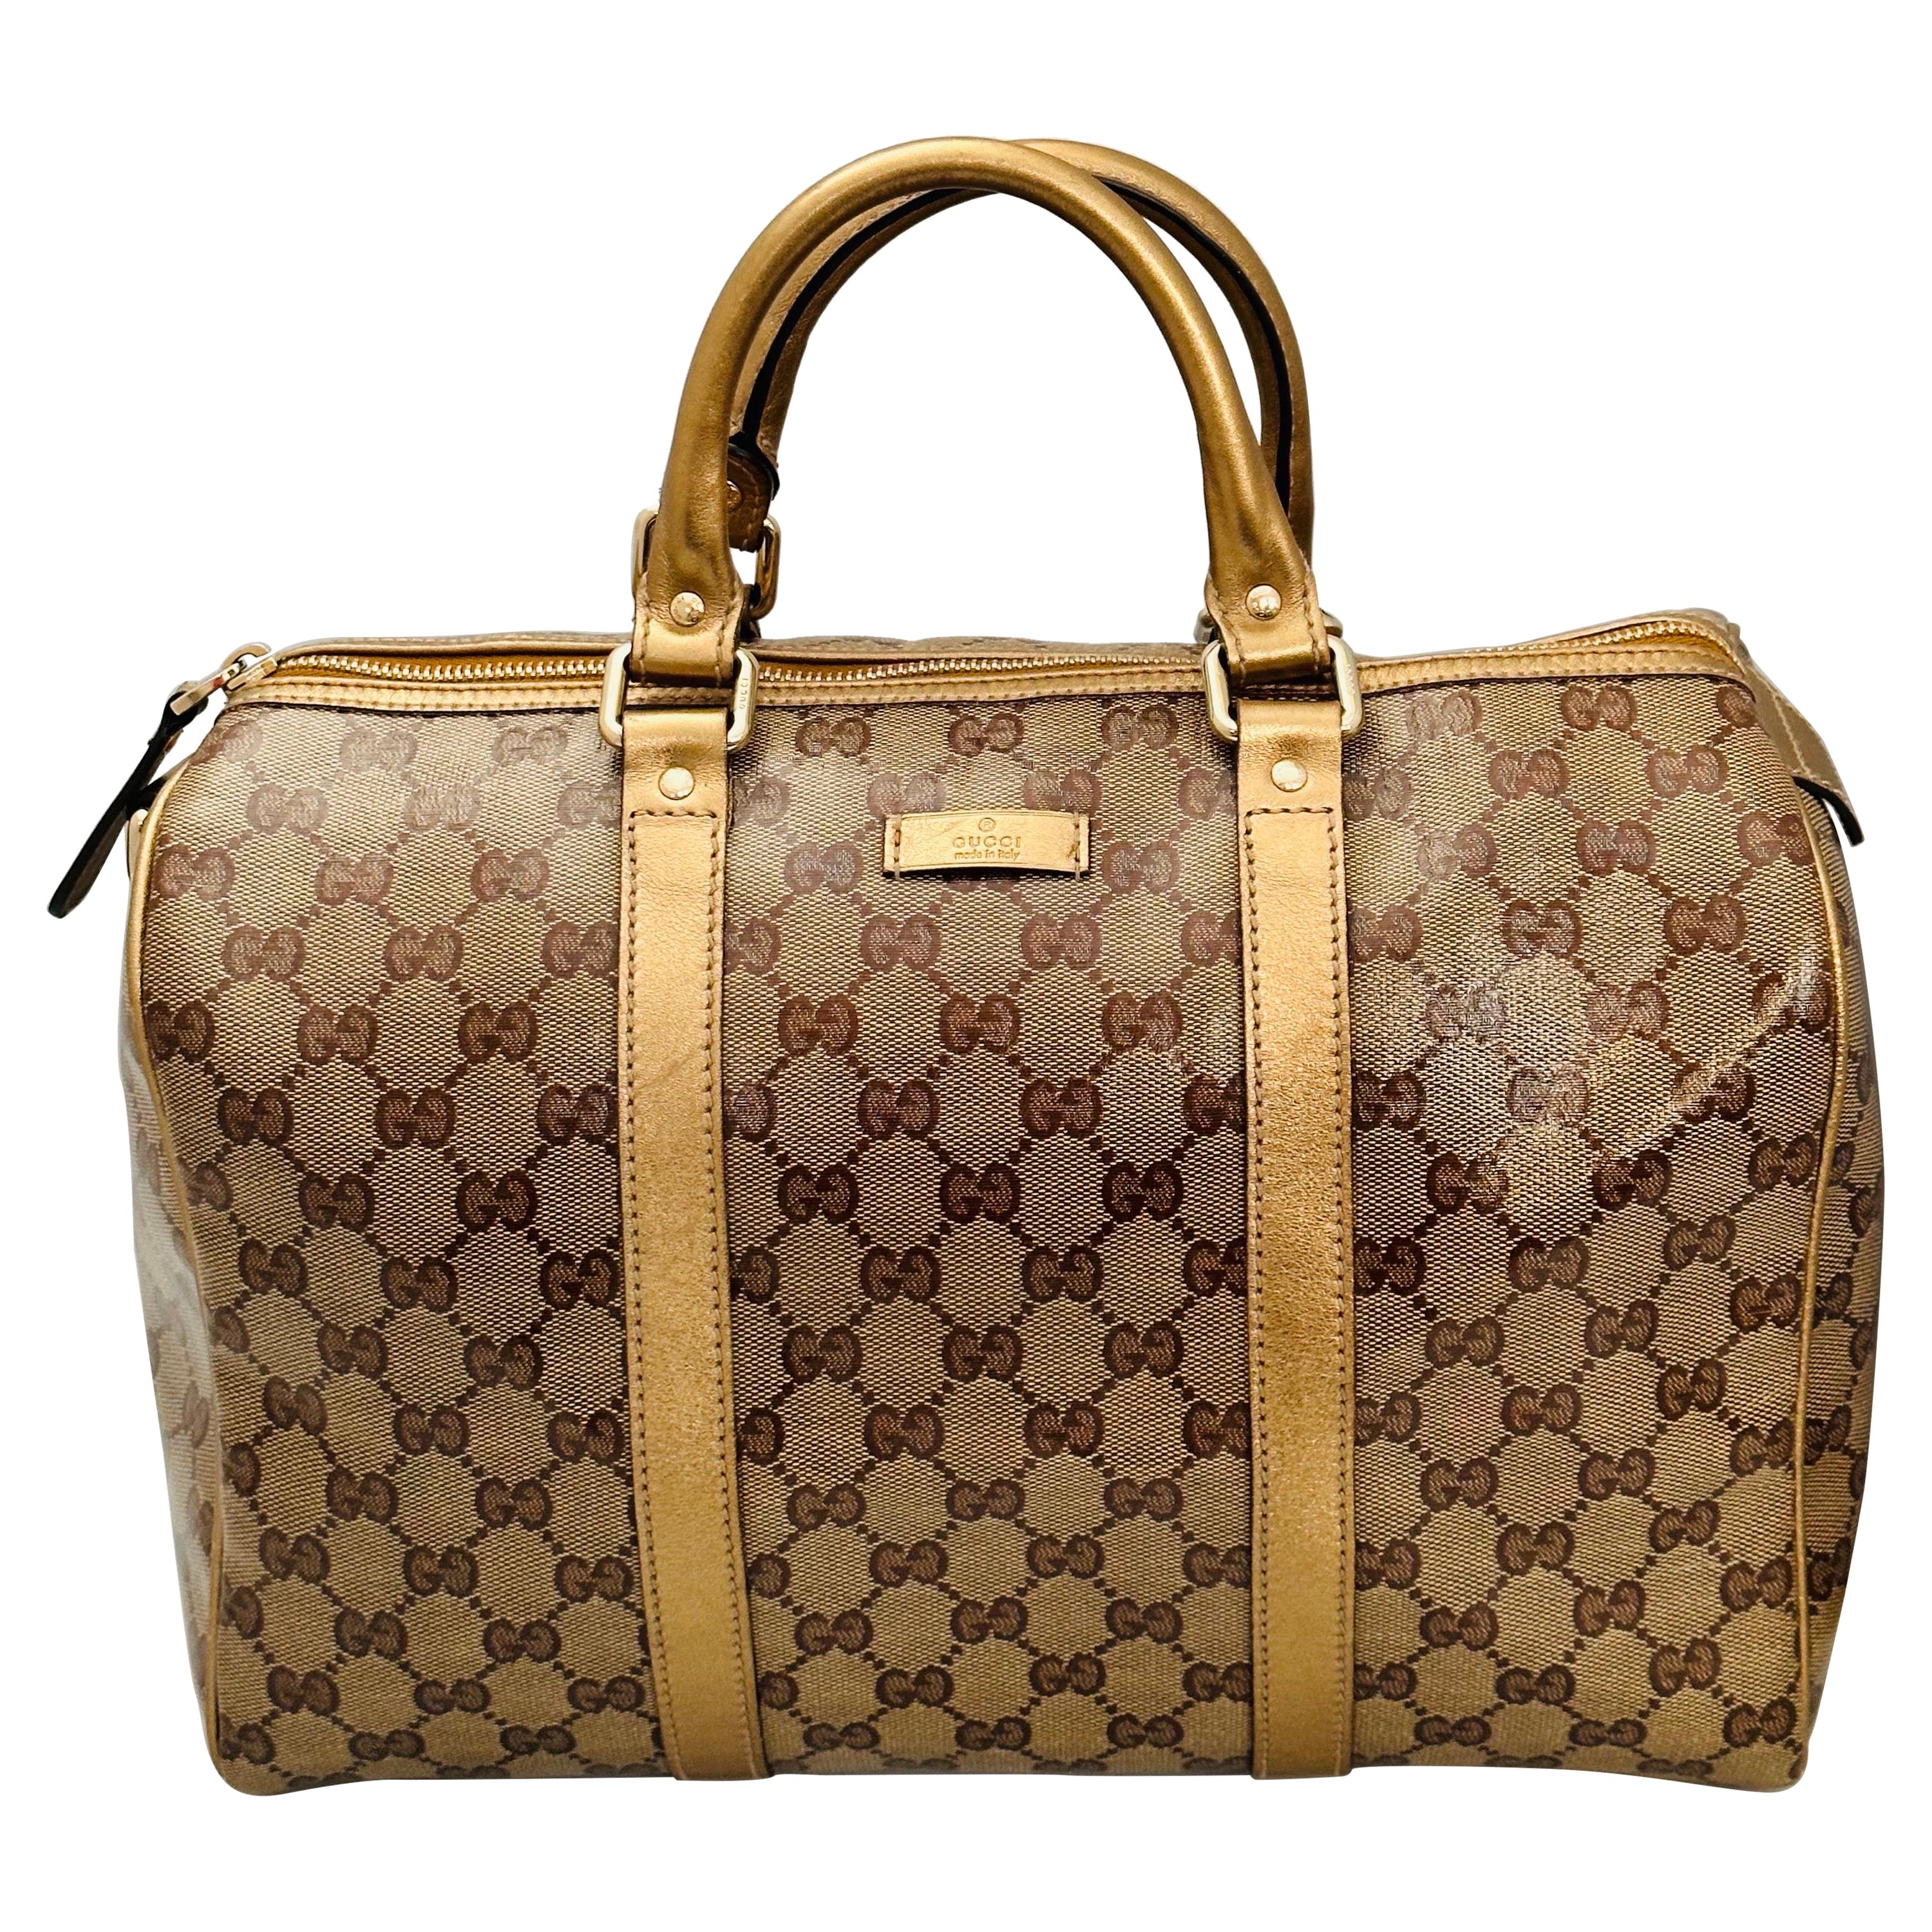 Gucci Joy Boston Bag GG Imprime Medium in Excellent condition like New